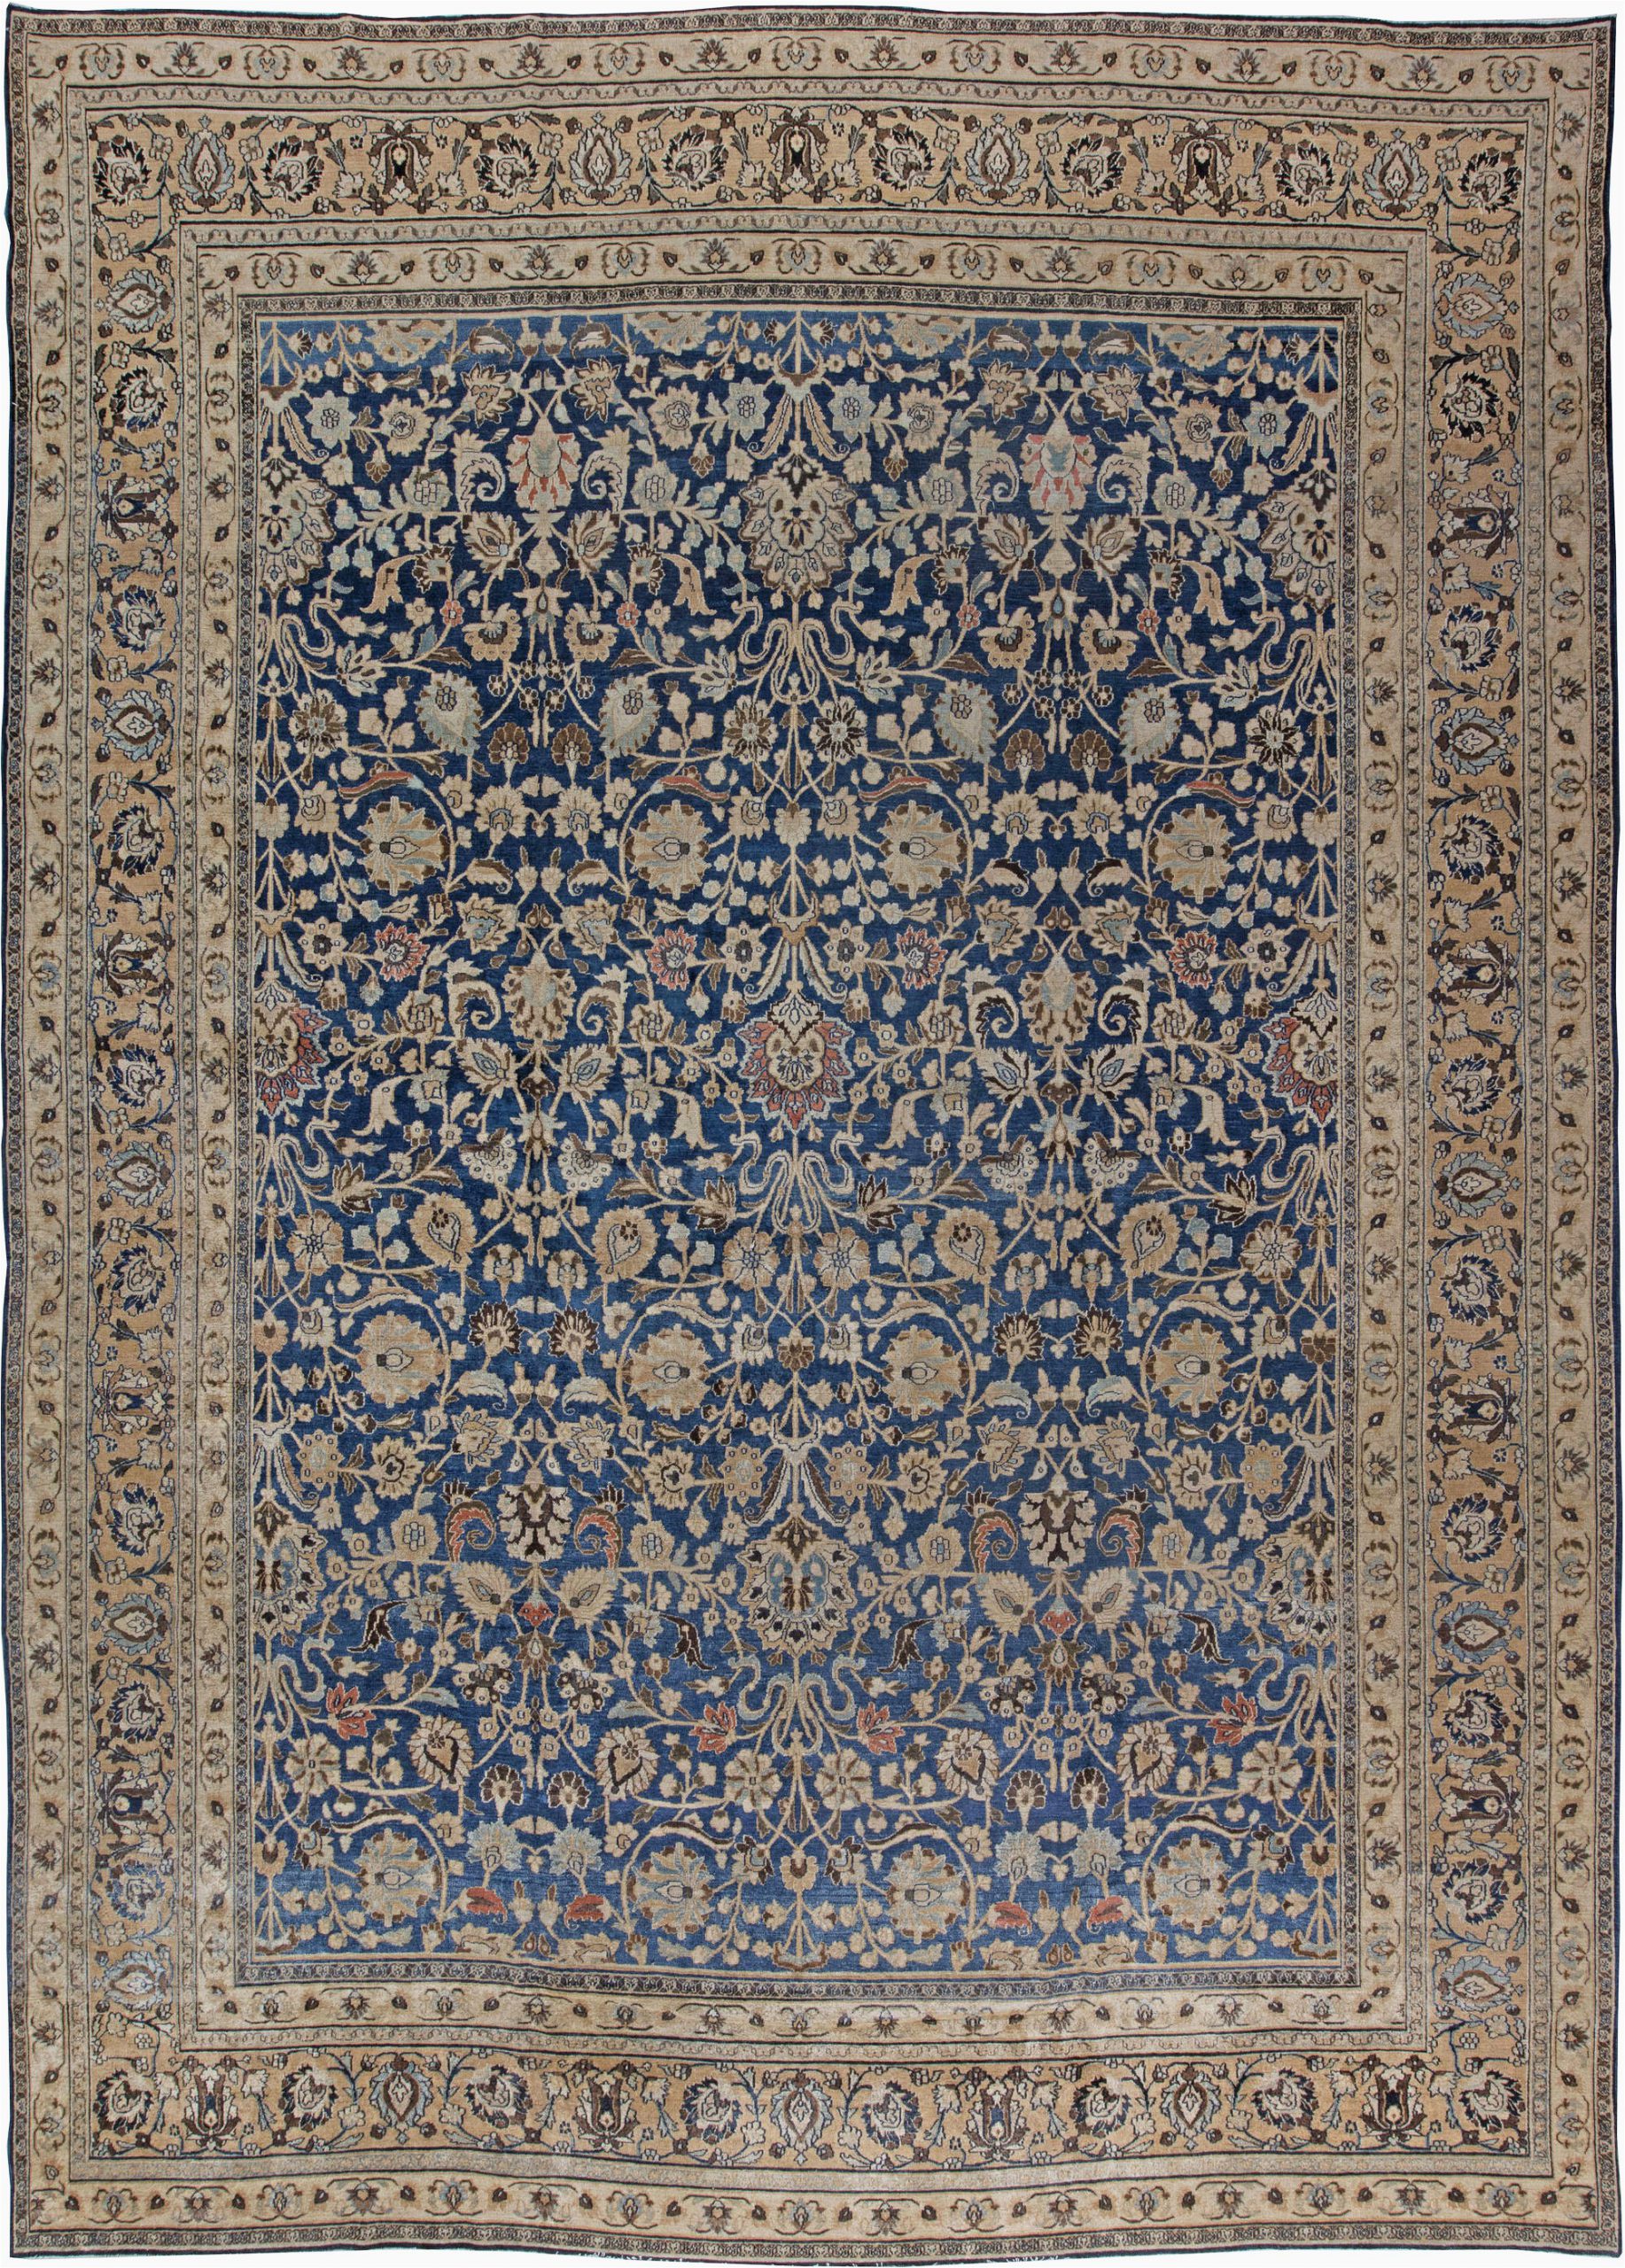 antique rug persian tabriz blue botanical bb4292 17x12